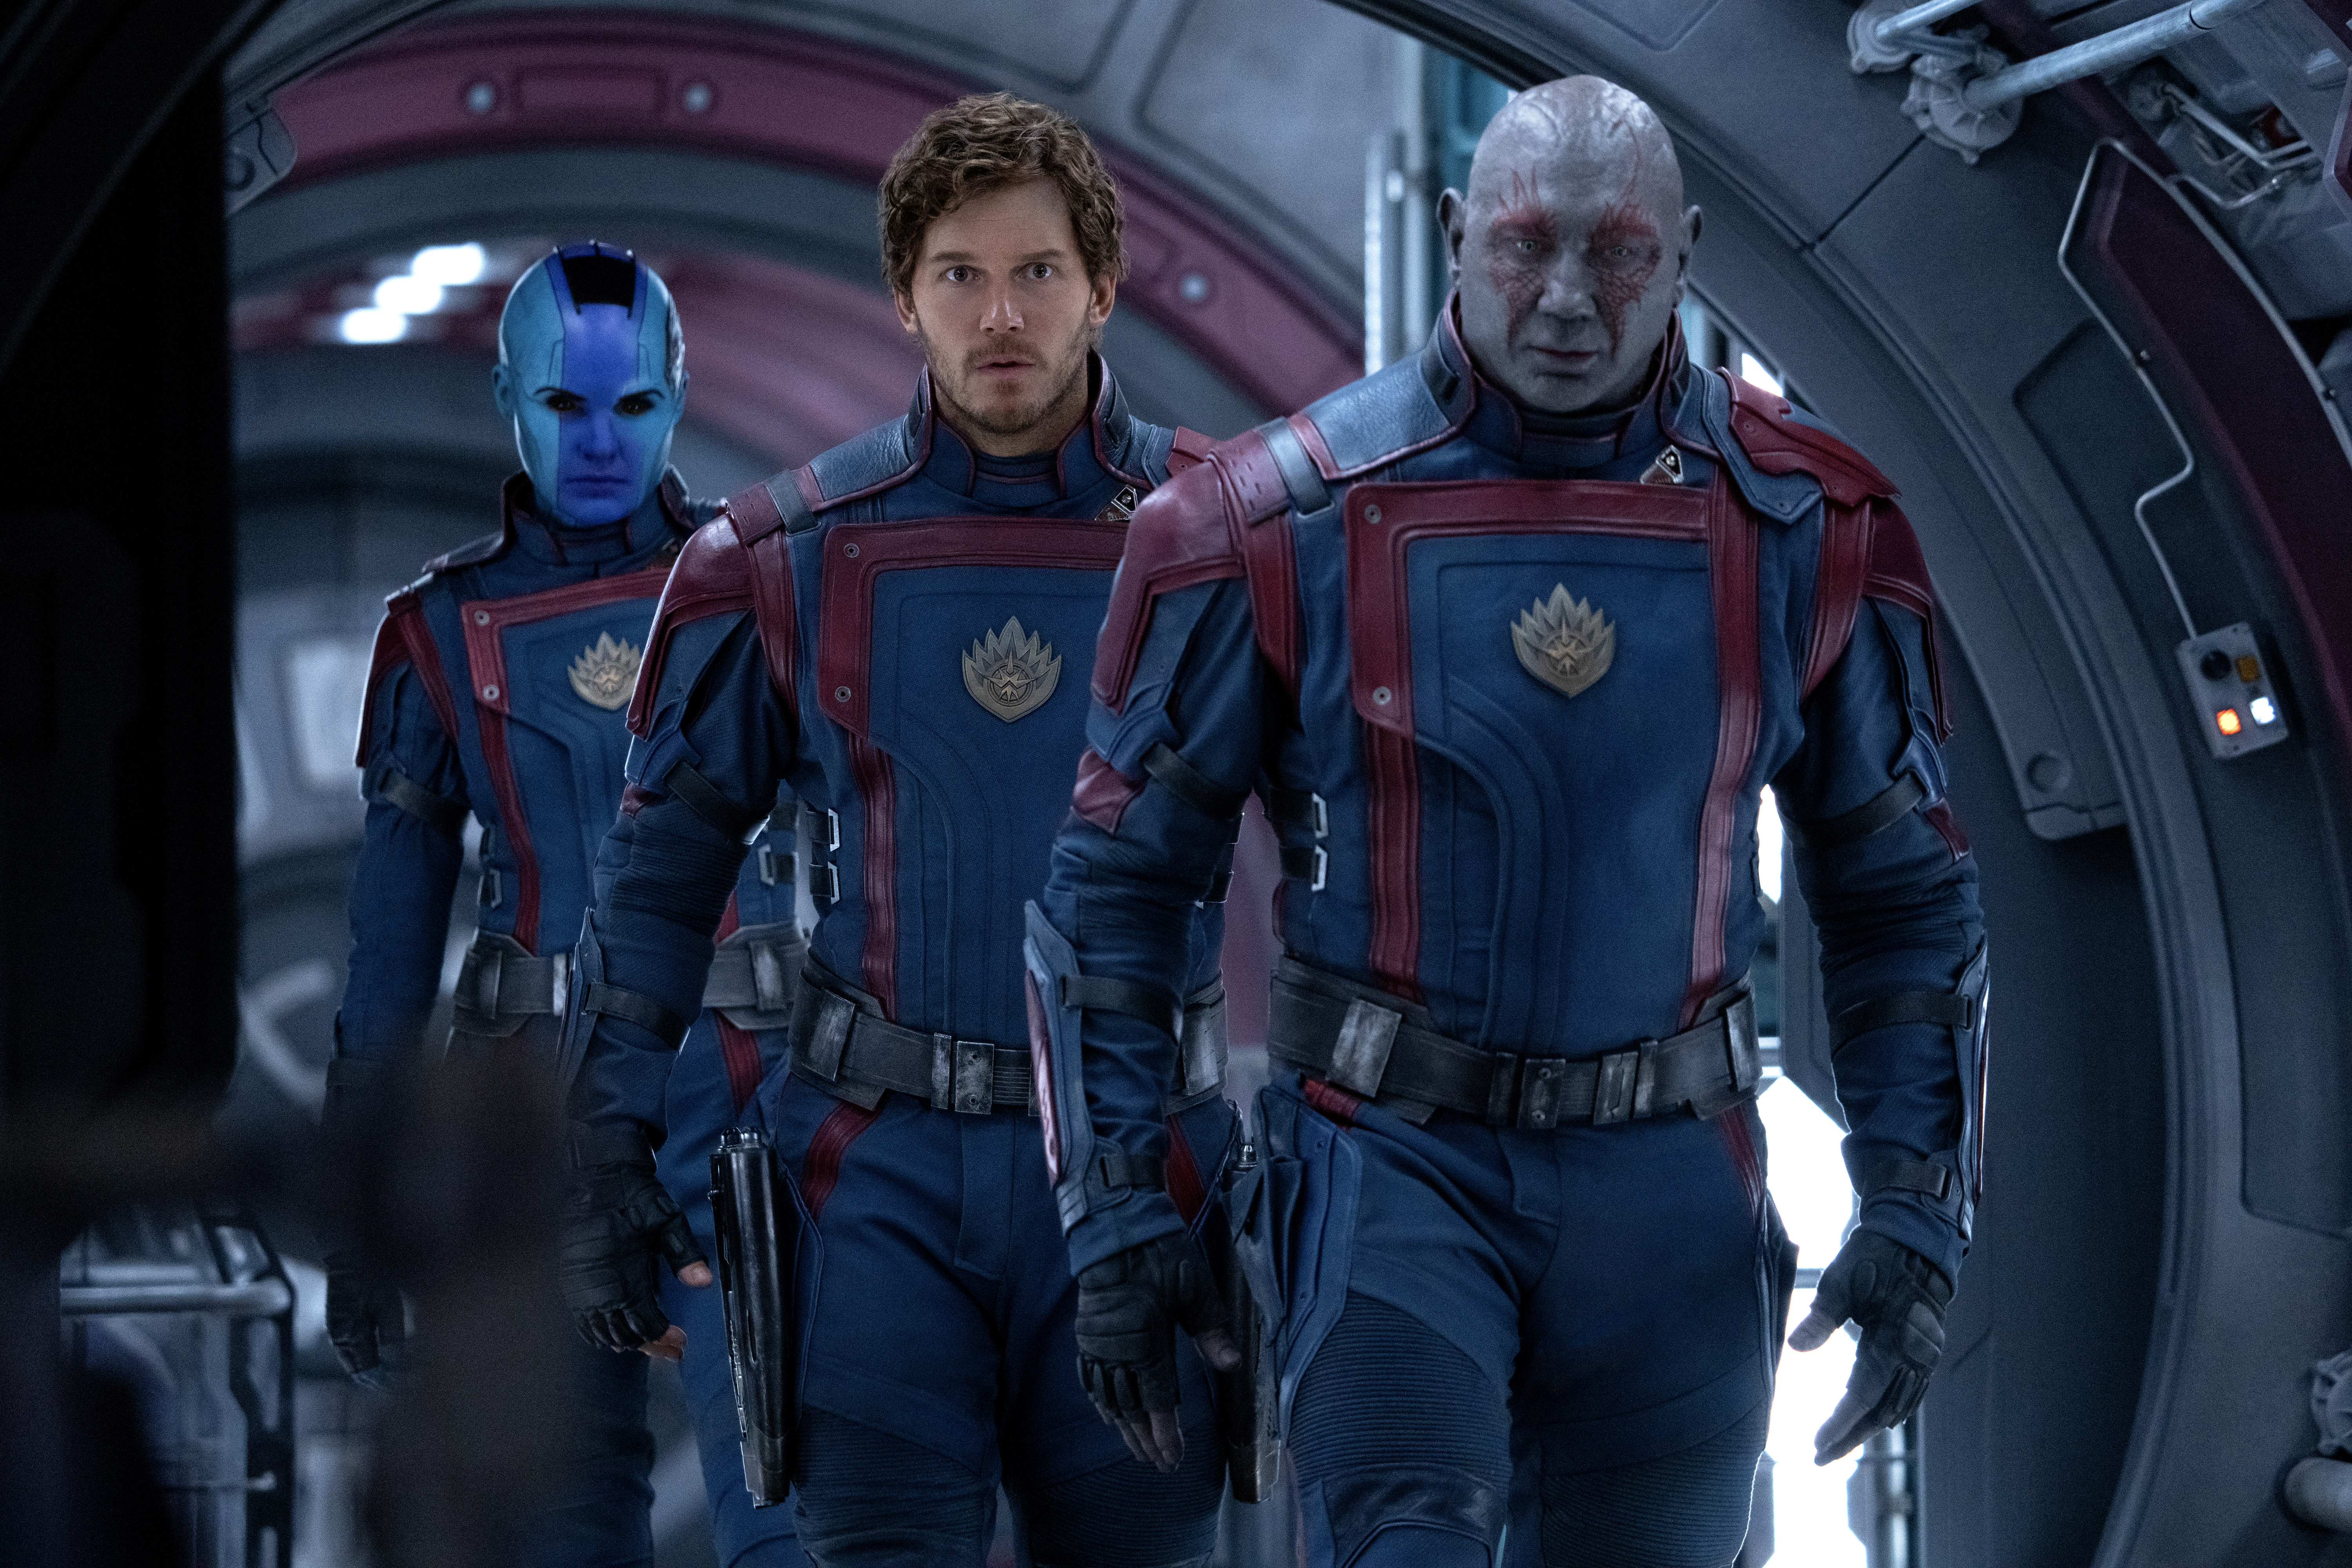 Star-Lord (Chris Pratt), Drax the Destroyer (Dave Bautista), and Nebula (Karen Gillan) walk through a ship hallway in uniform in Guardians of the Galaxy Vol. 3